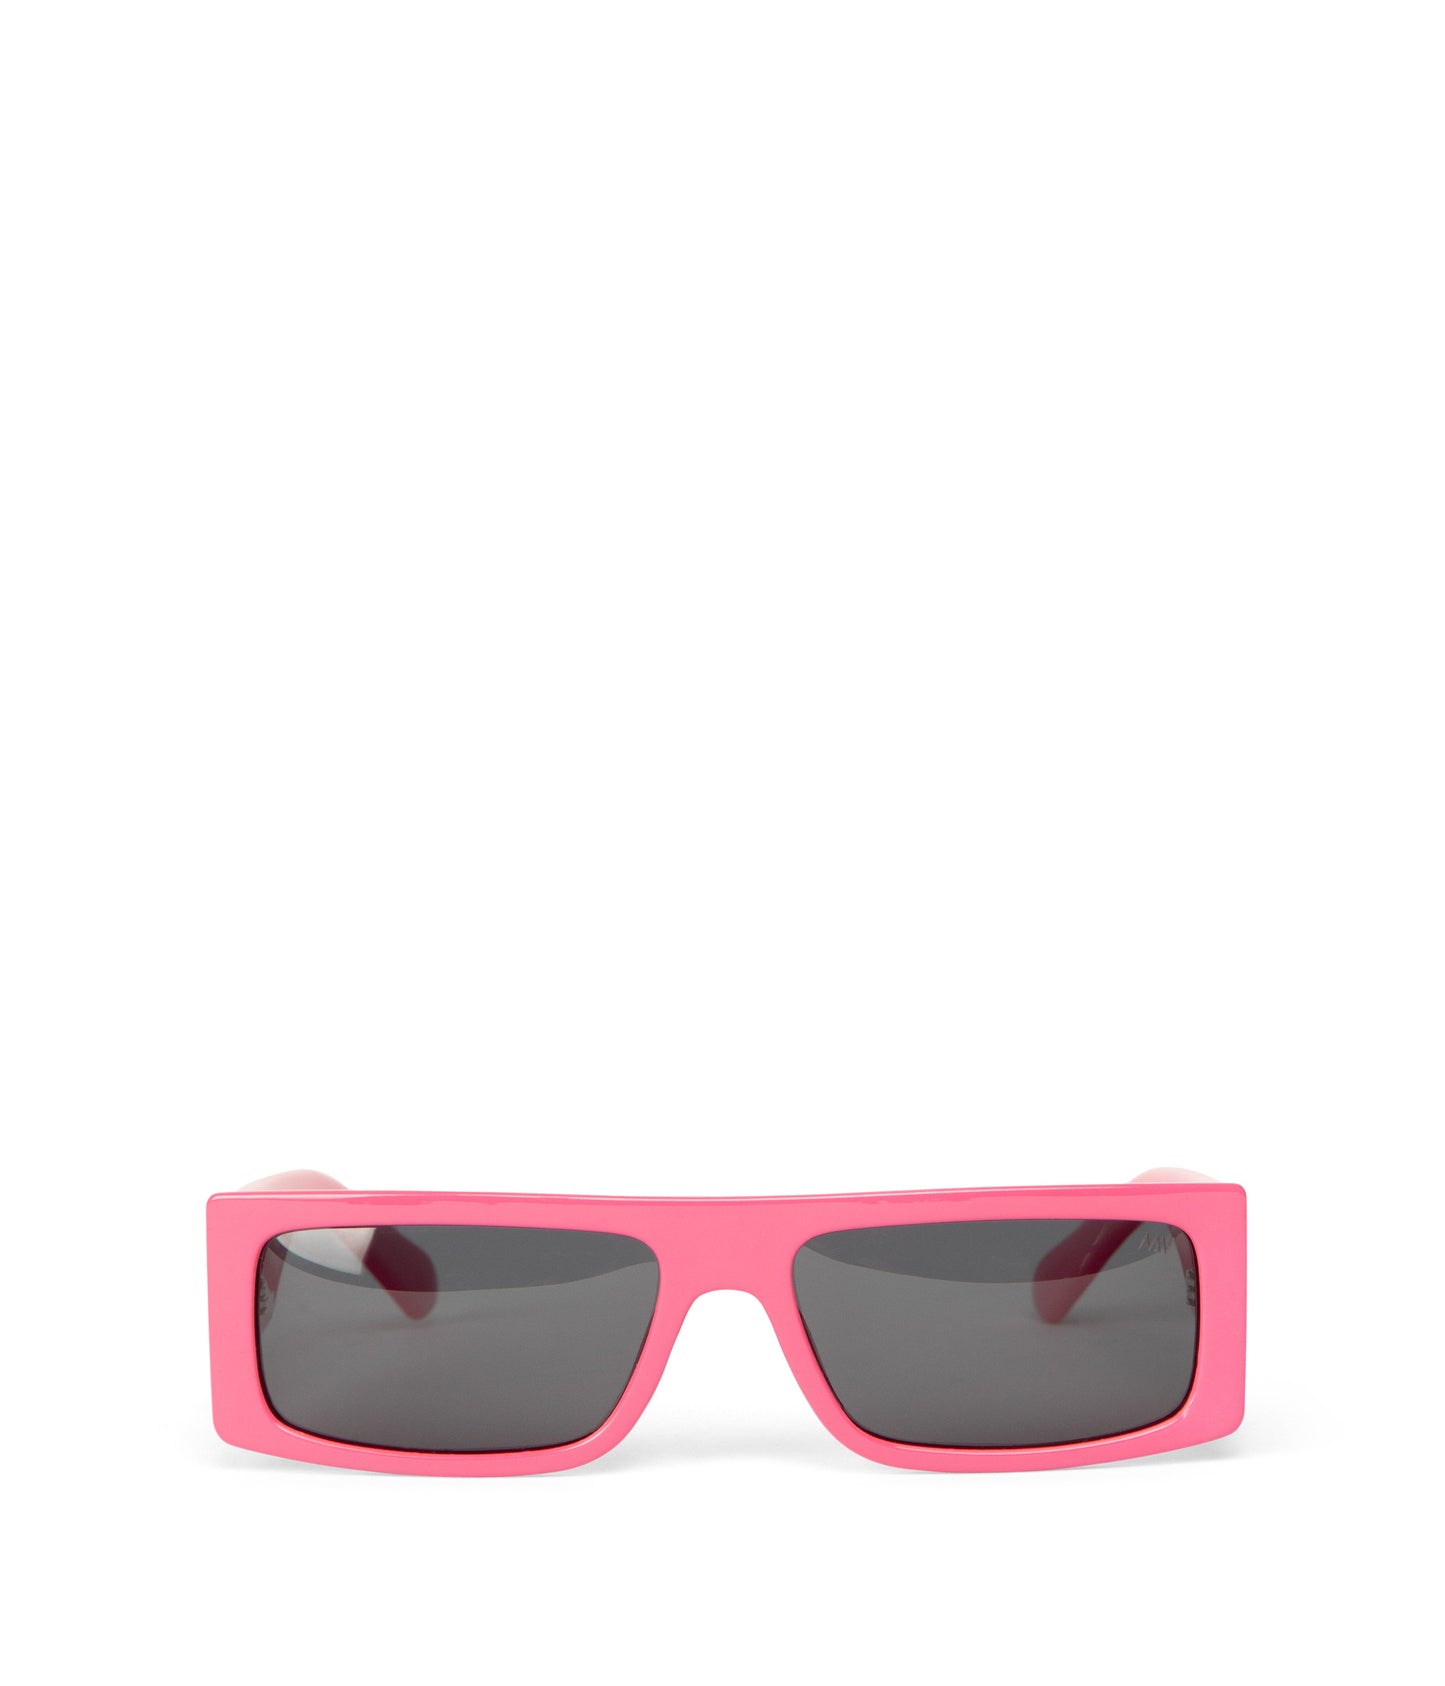 SAWAI-2 Recycled Rectangle Sunglasses | Color: Purple, Grey - variant::fushia